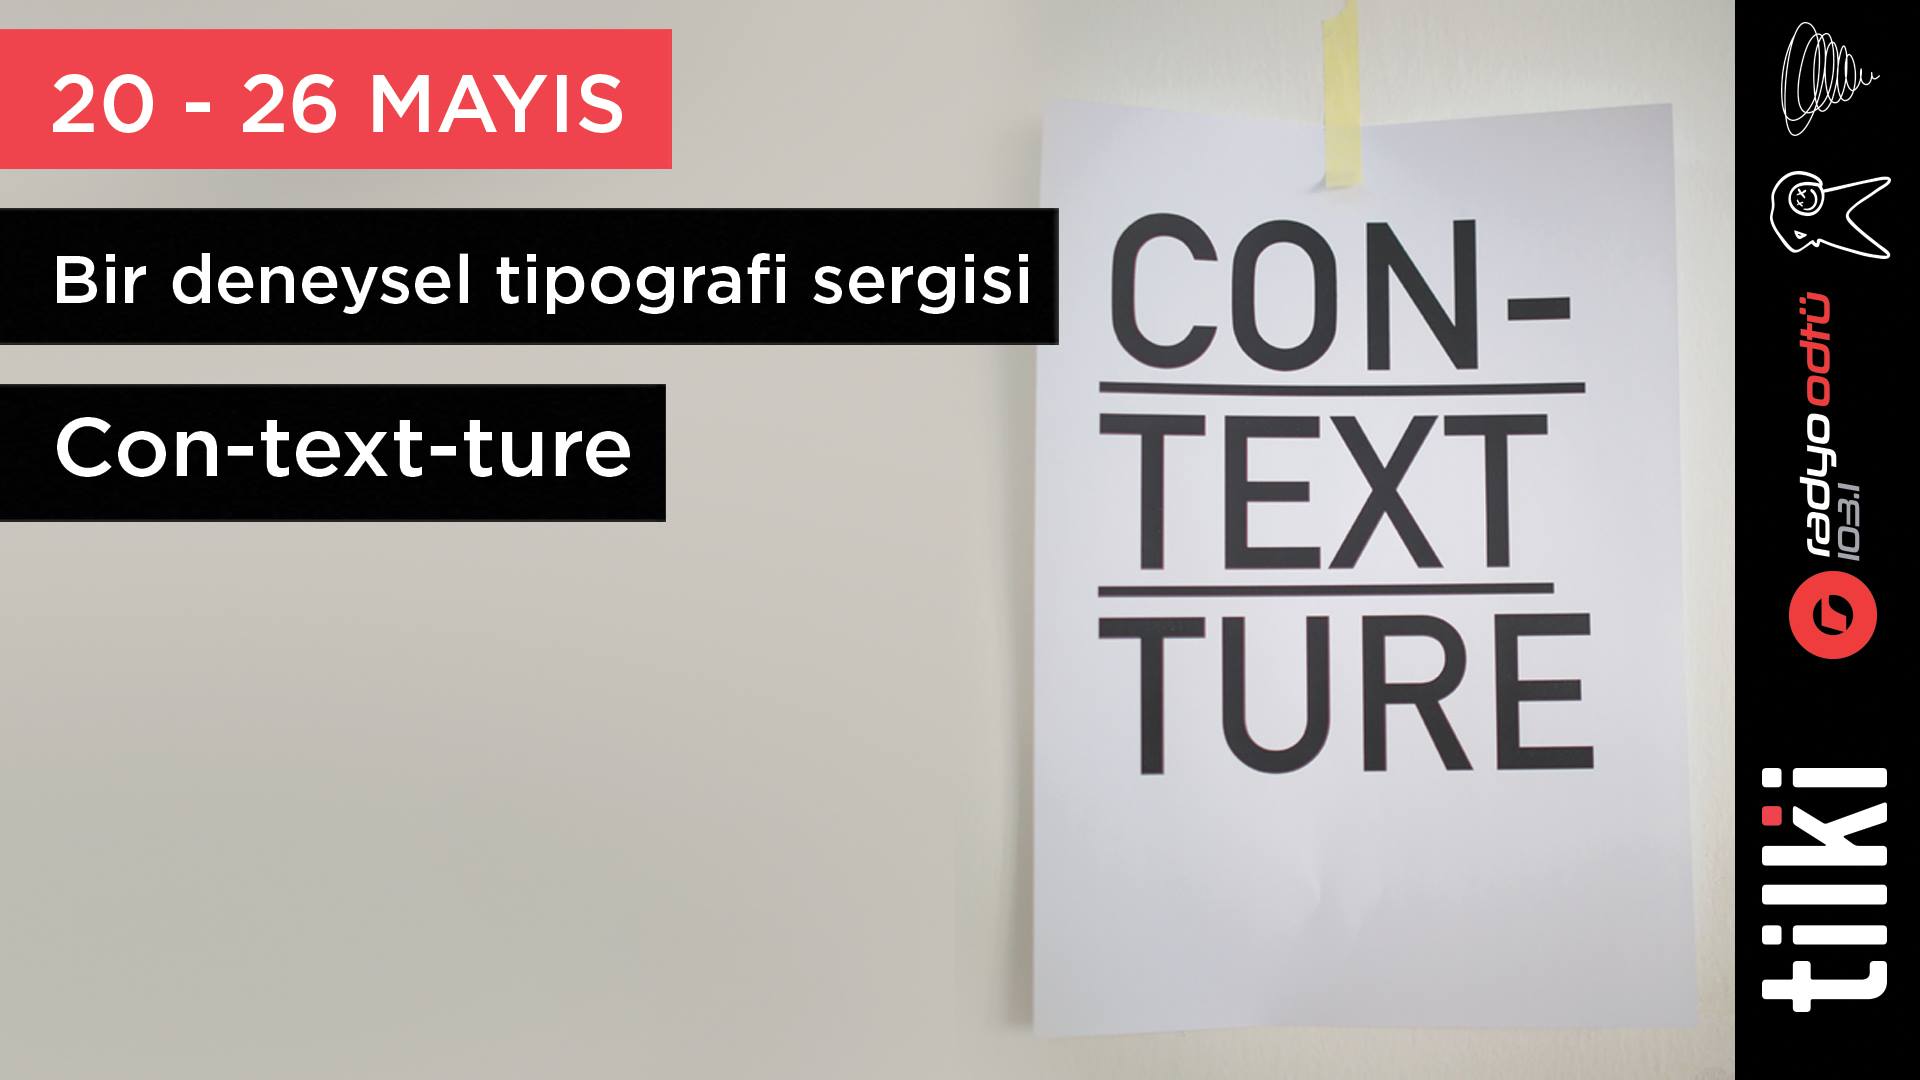 x Bir Deneysel Tipografi Sergisi Ankara (20-26 Mayıs) - Mayıs 2016 13:52